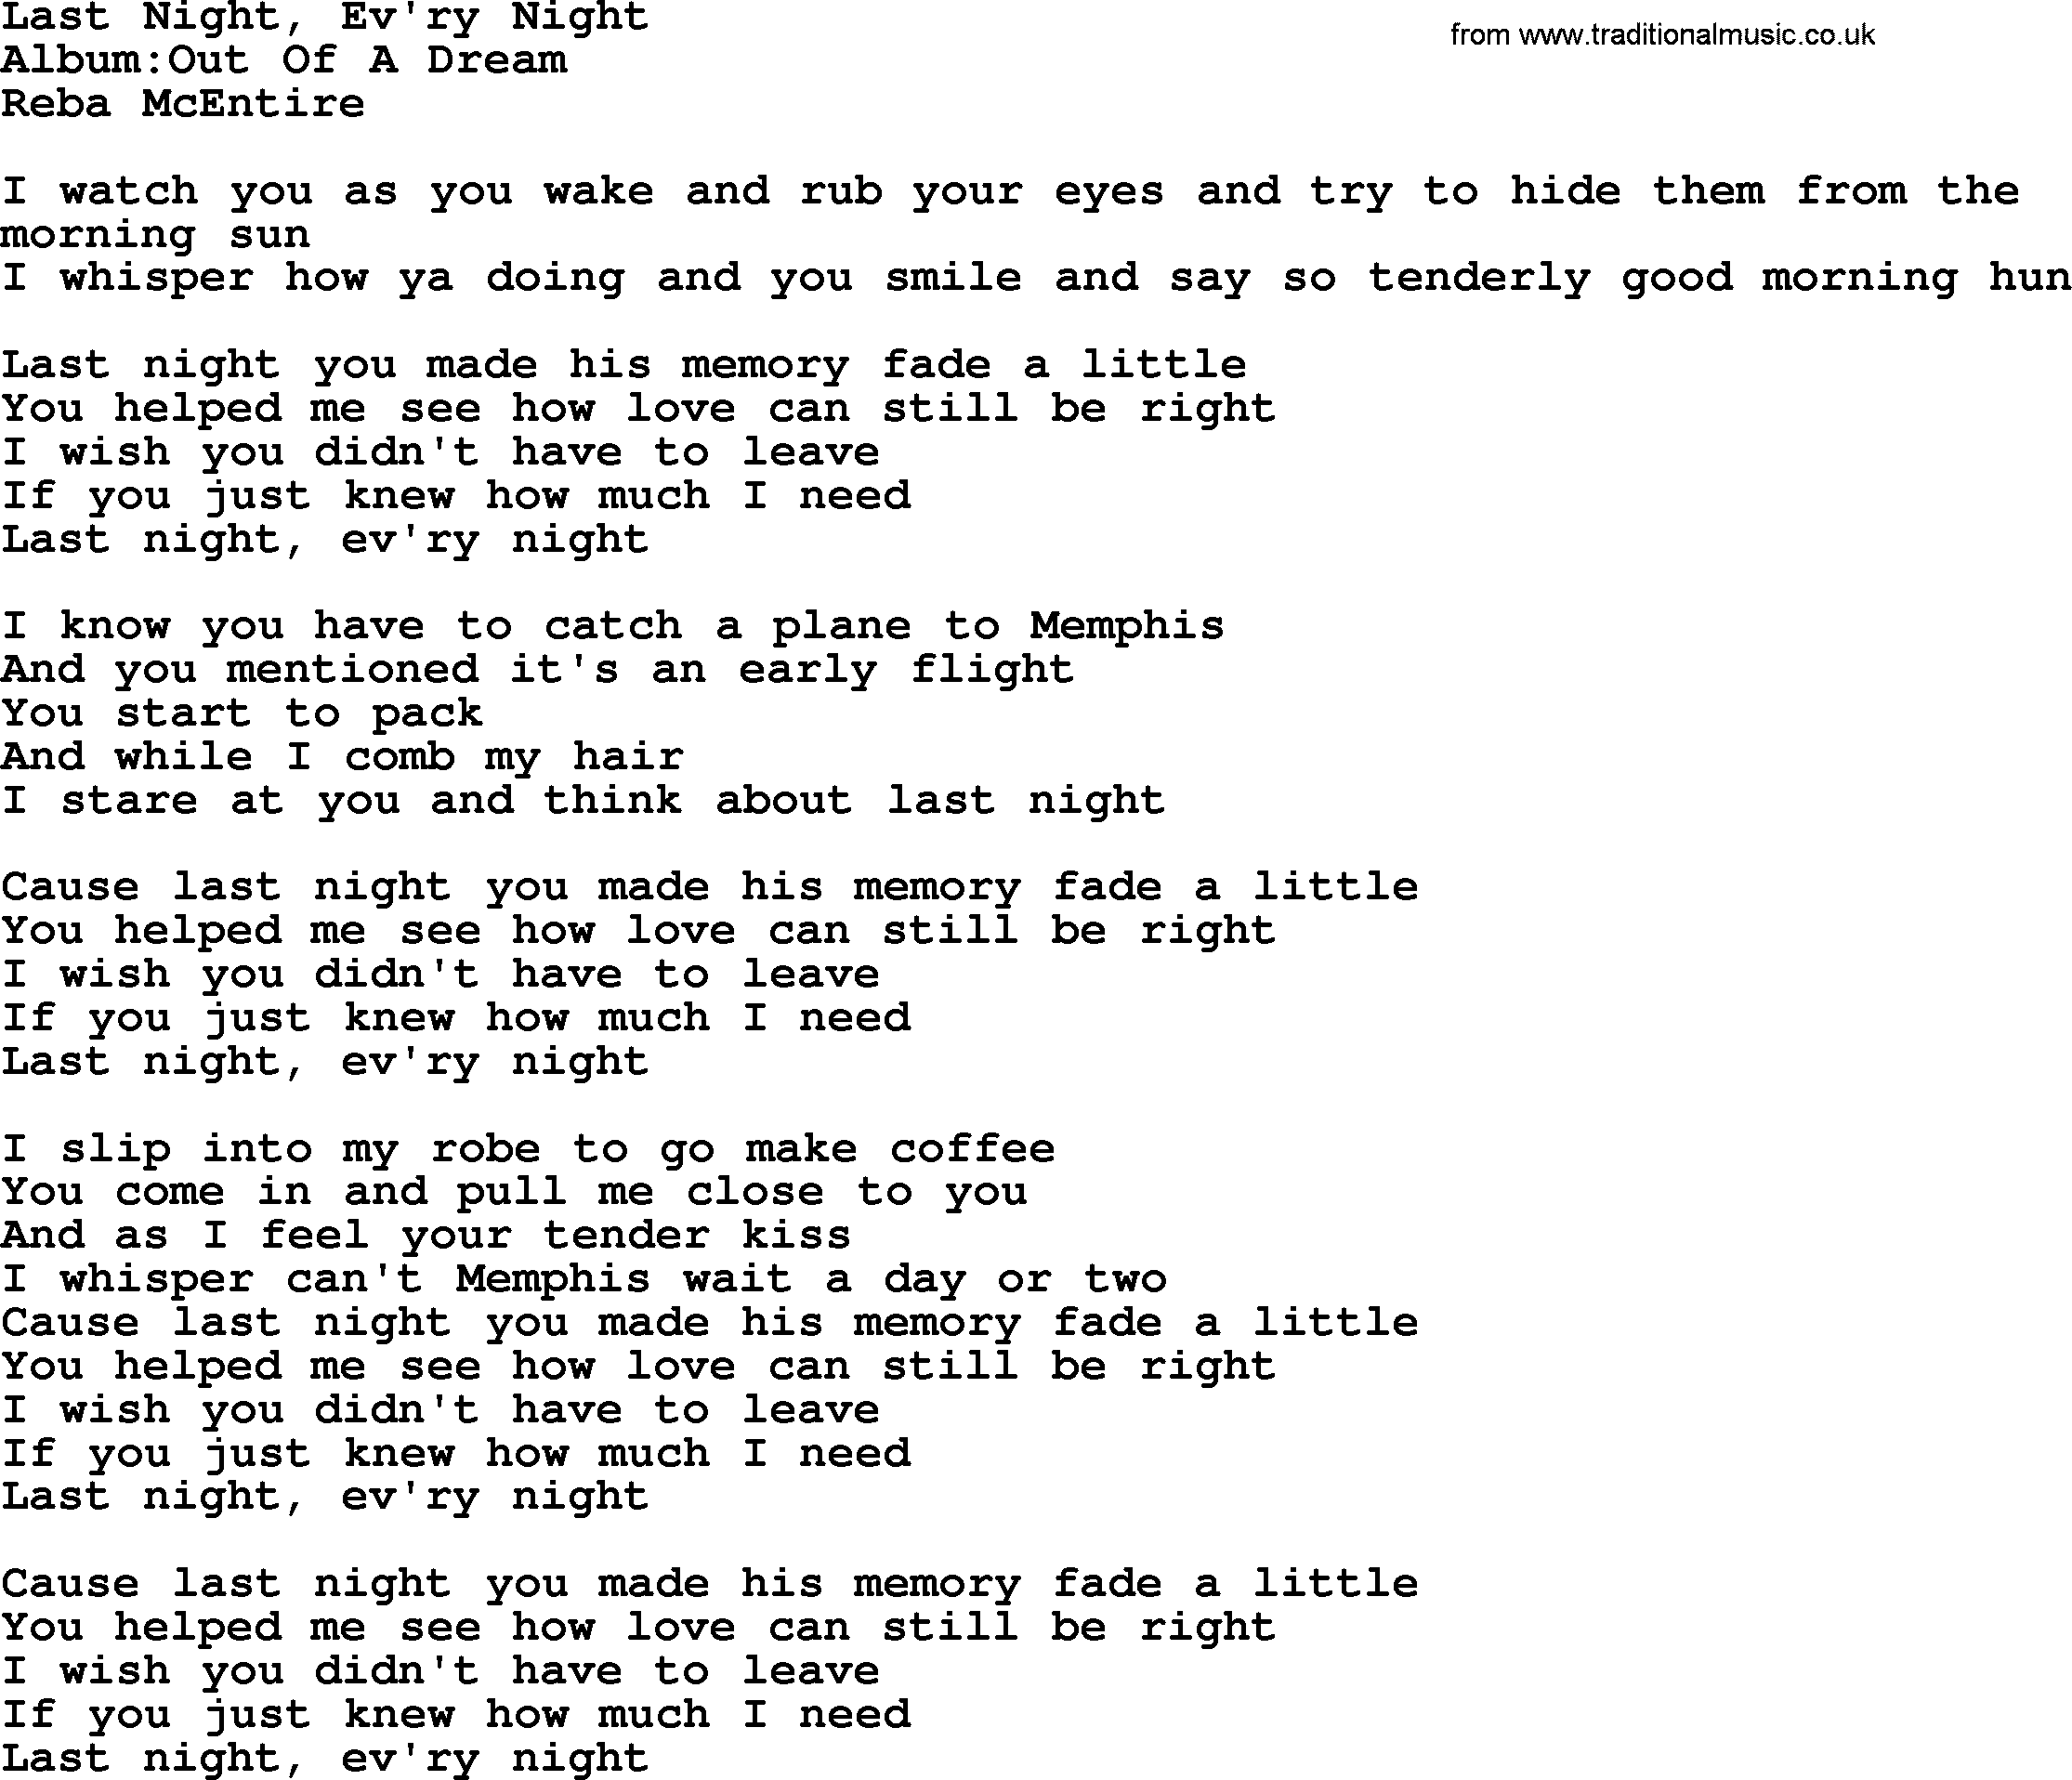 Reba McEntire song: Last Night, Ev'ry Night lyrics